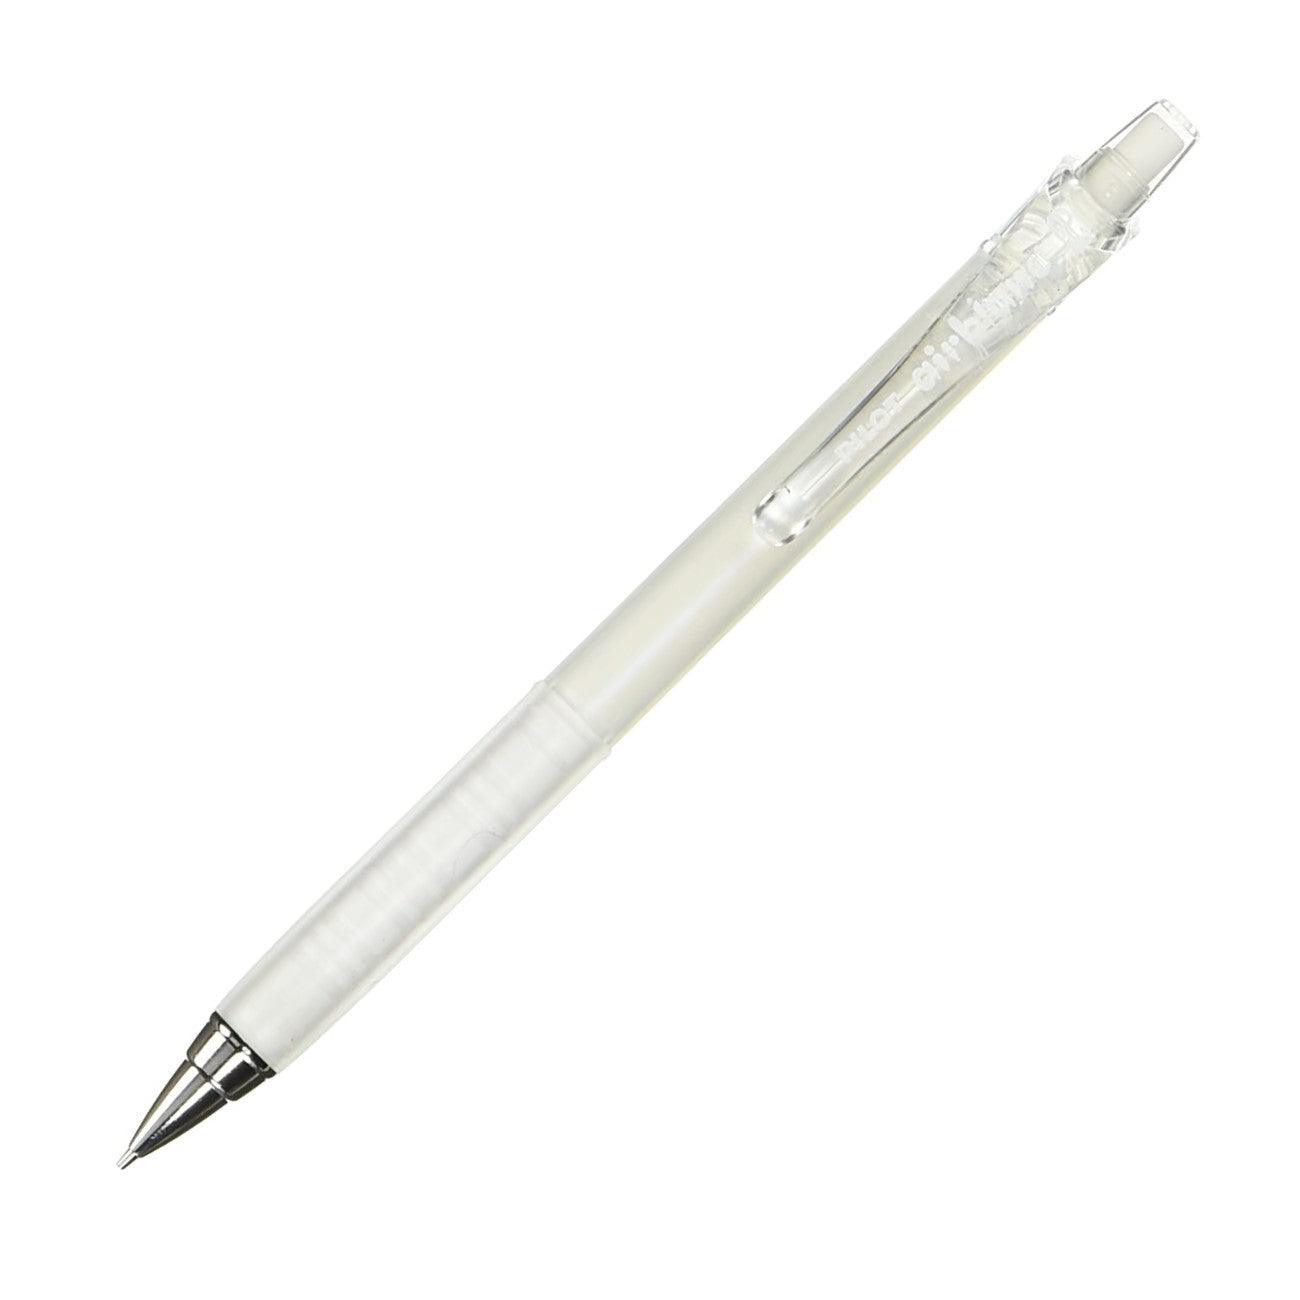 (Pre-Order) PILOT air blanc 0.3mm mechanical pencil HA-20R3 HERFN-10 - CHL-STORE 